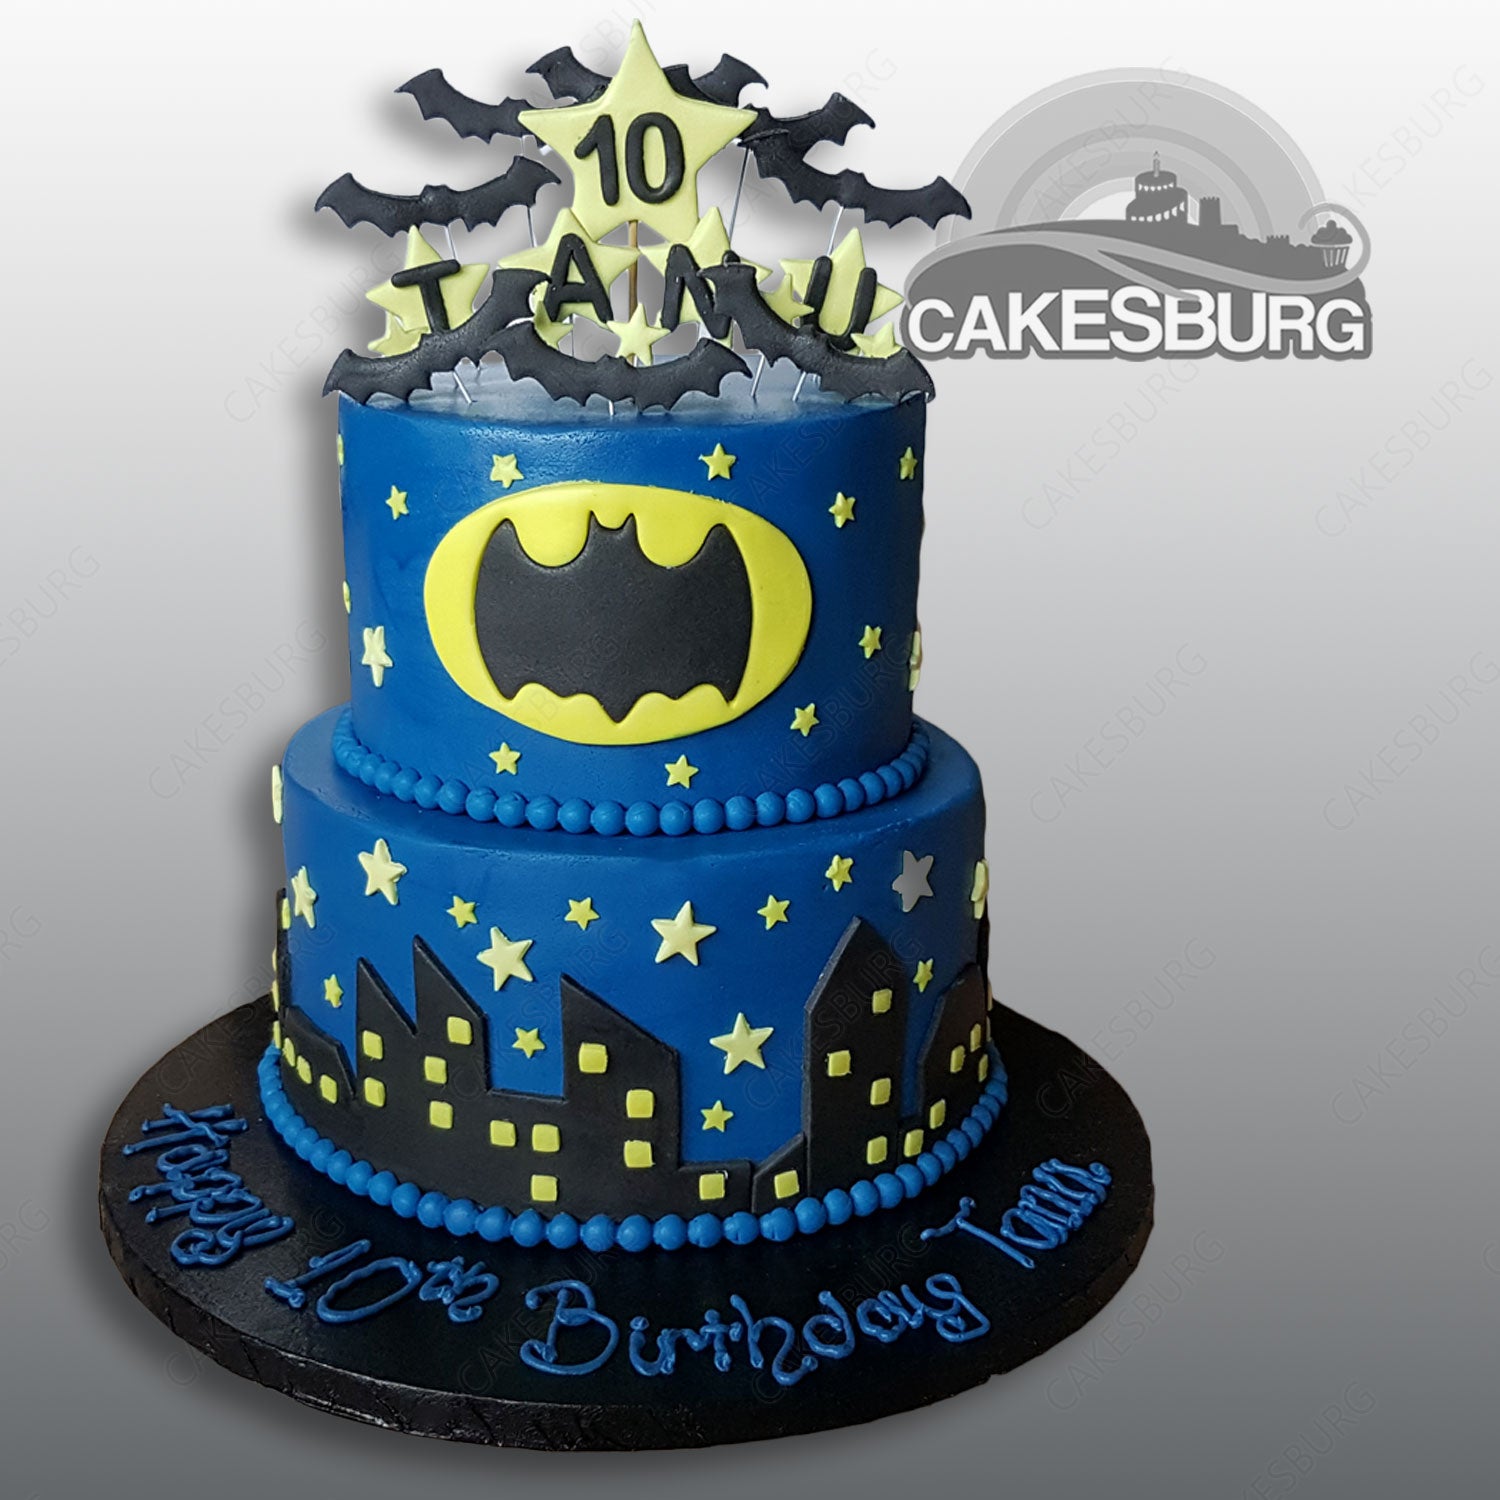 3 tier batman cake for my son's 4th birthday | Batman cake, Cake, Desserts